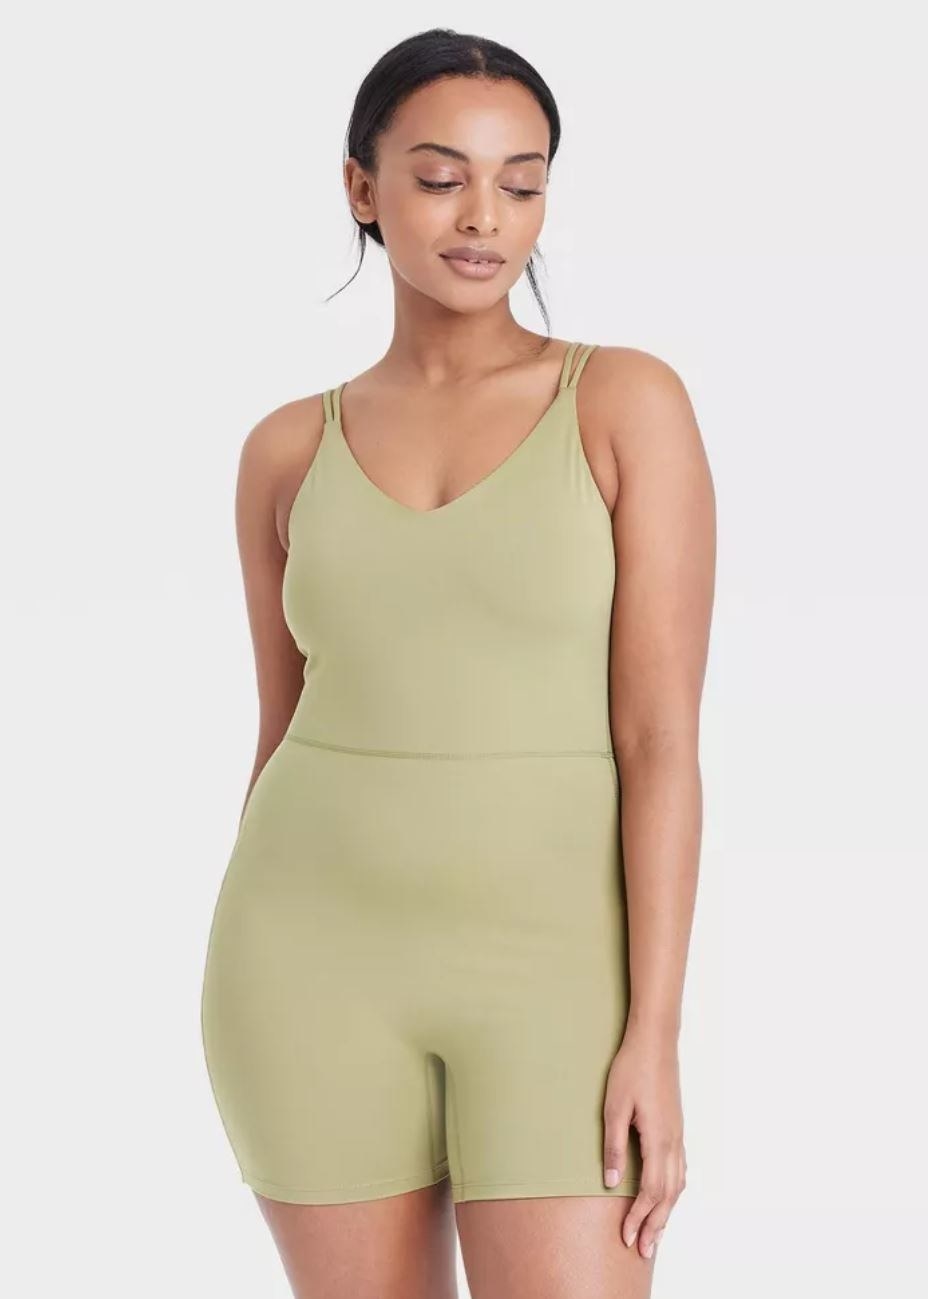 model wearing olive green short bodysuit